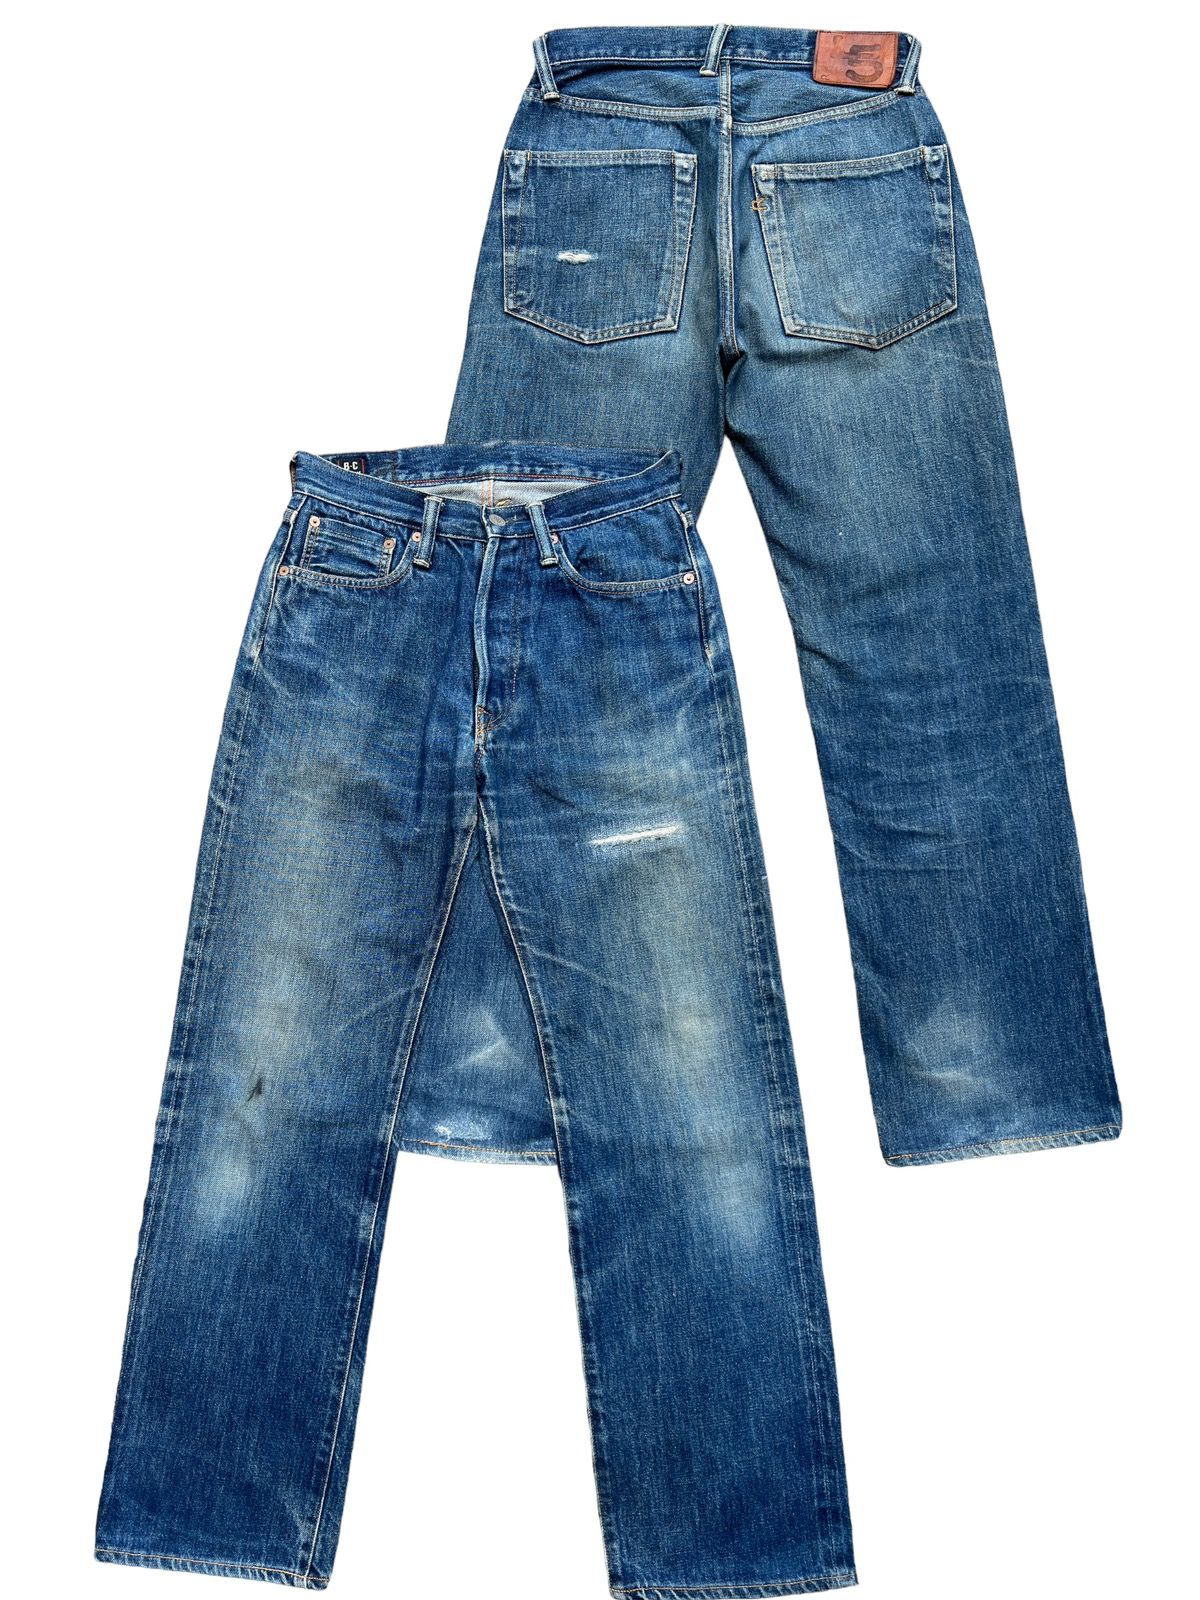 Vintage 45Rpm Selvedge Faded Distressed Denim Jeans 29x29 - 1